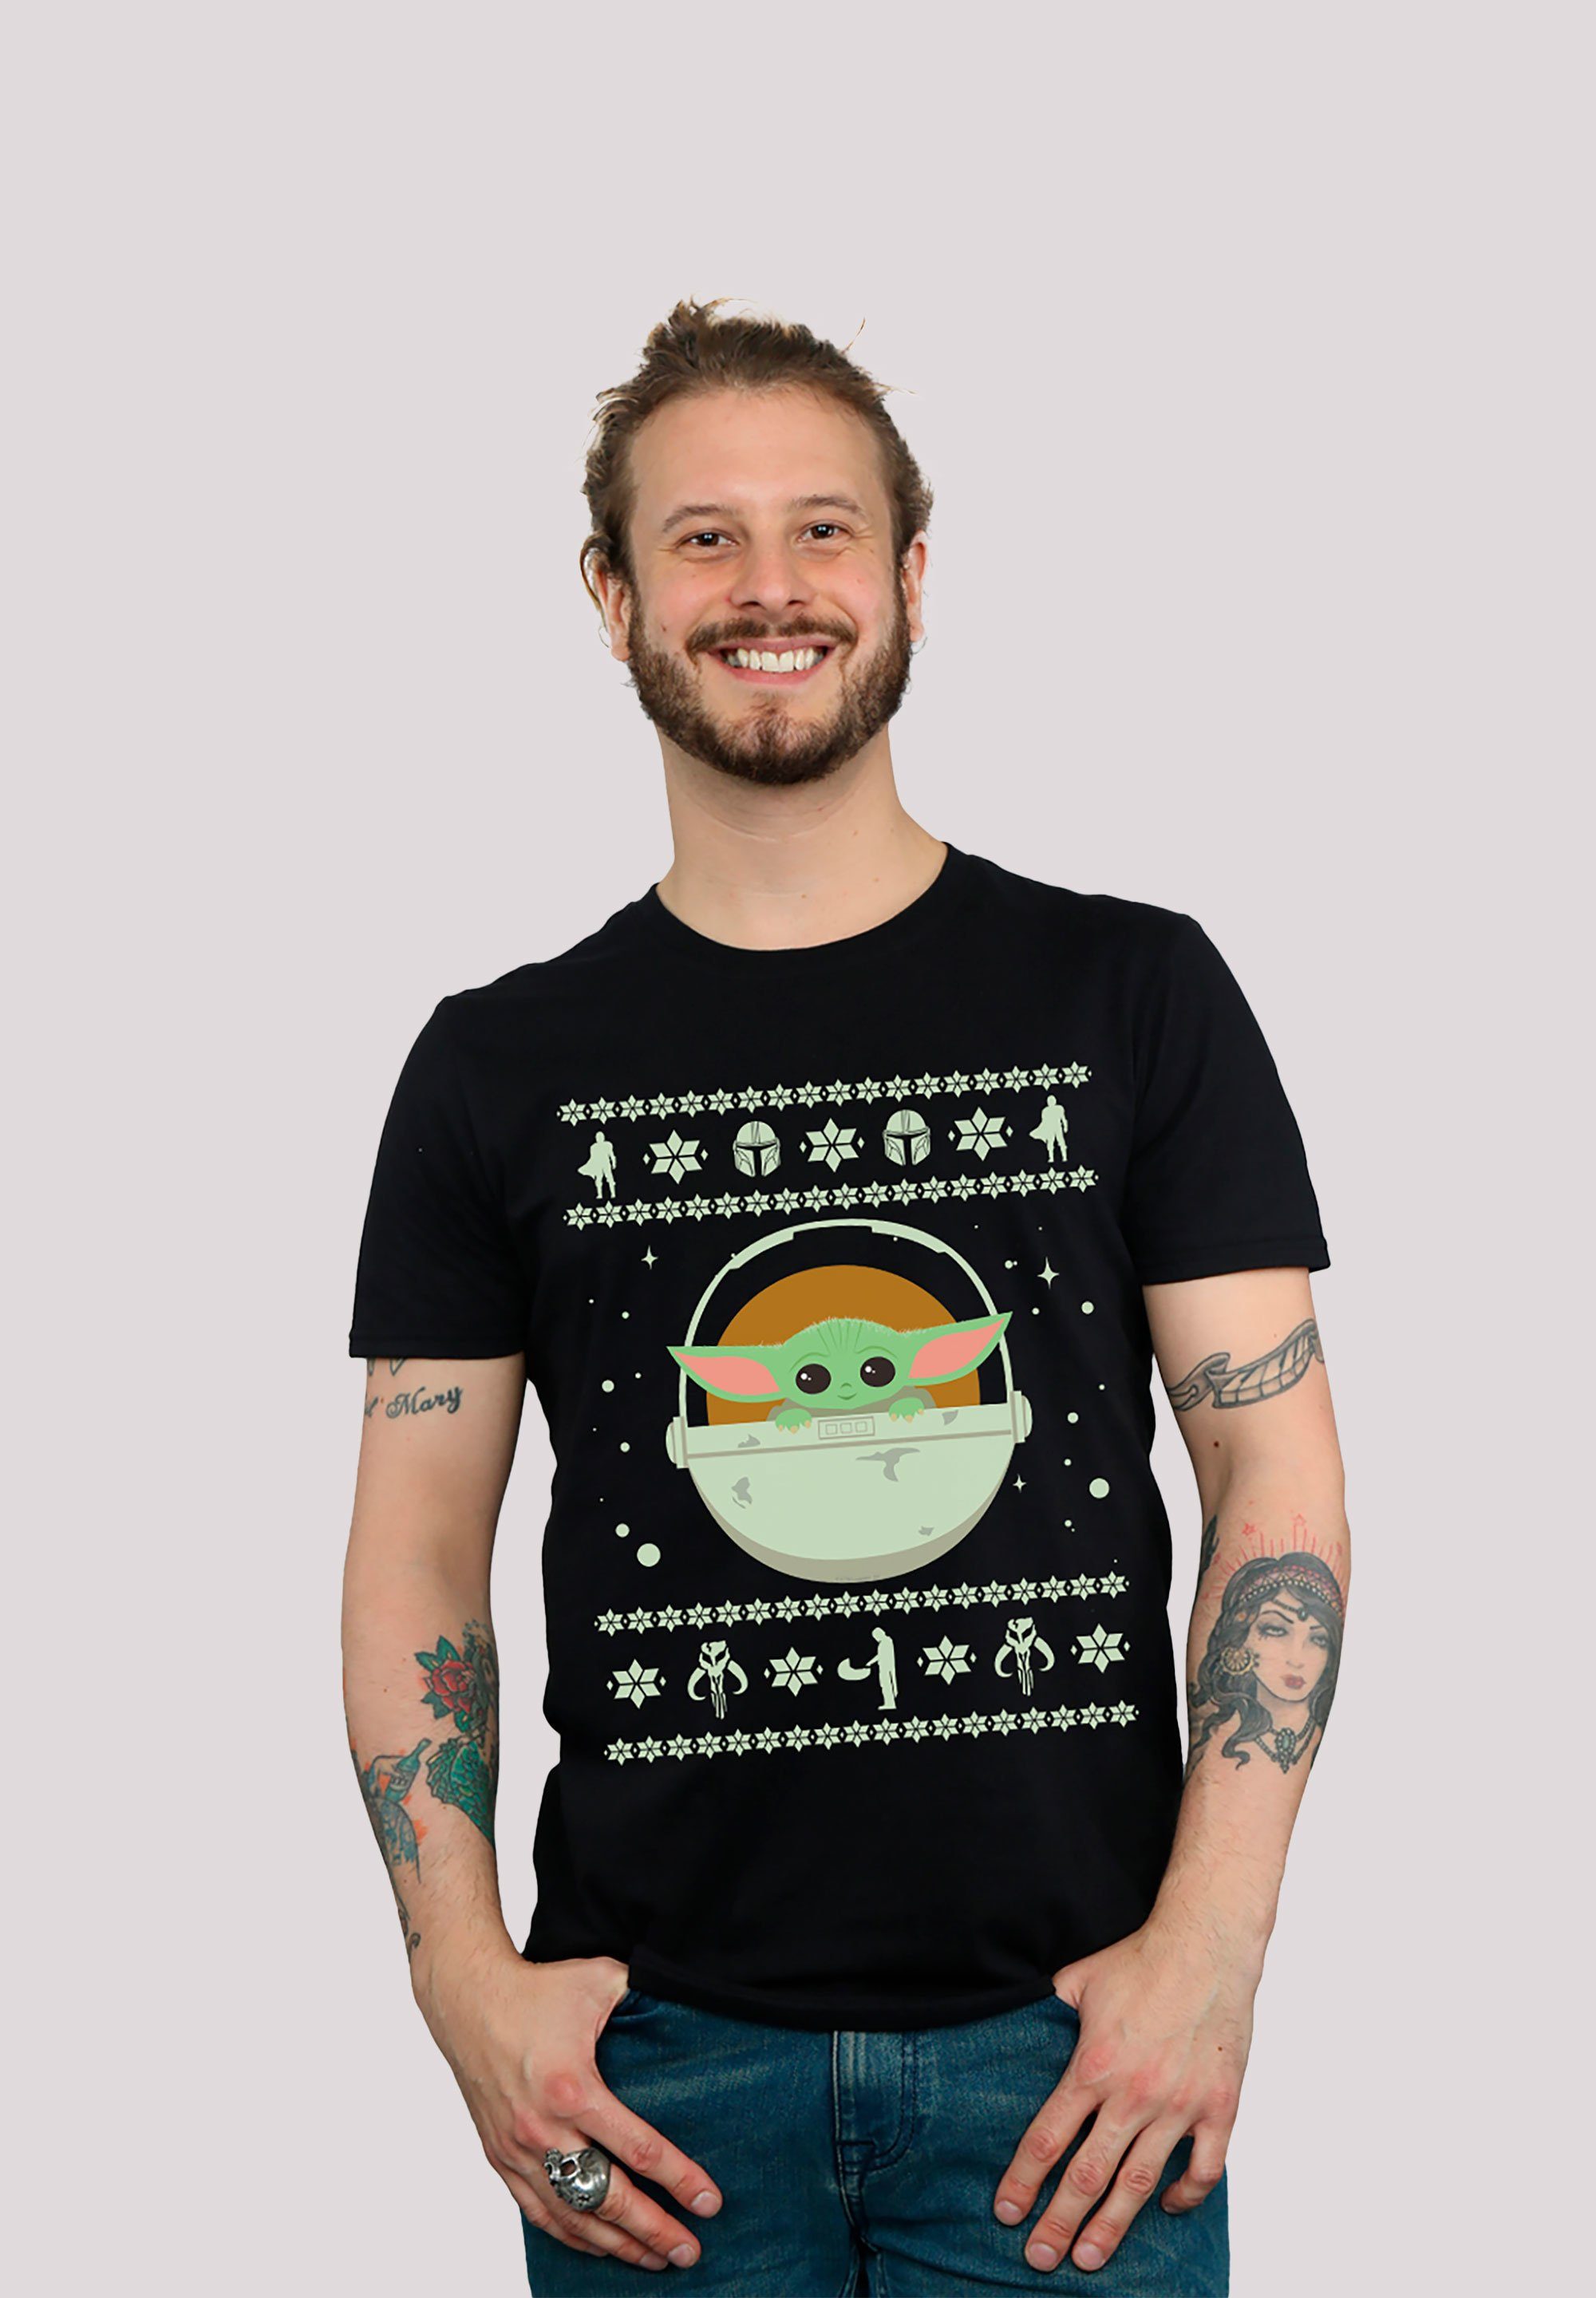 T-Shirt Baby Star Print The Yoda Wars F4NT4STIC Mandalorian